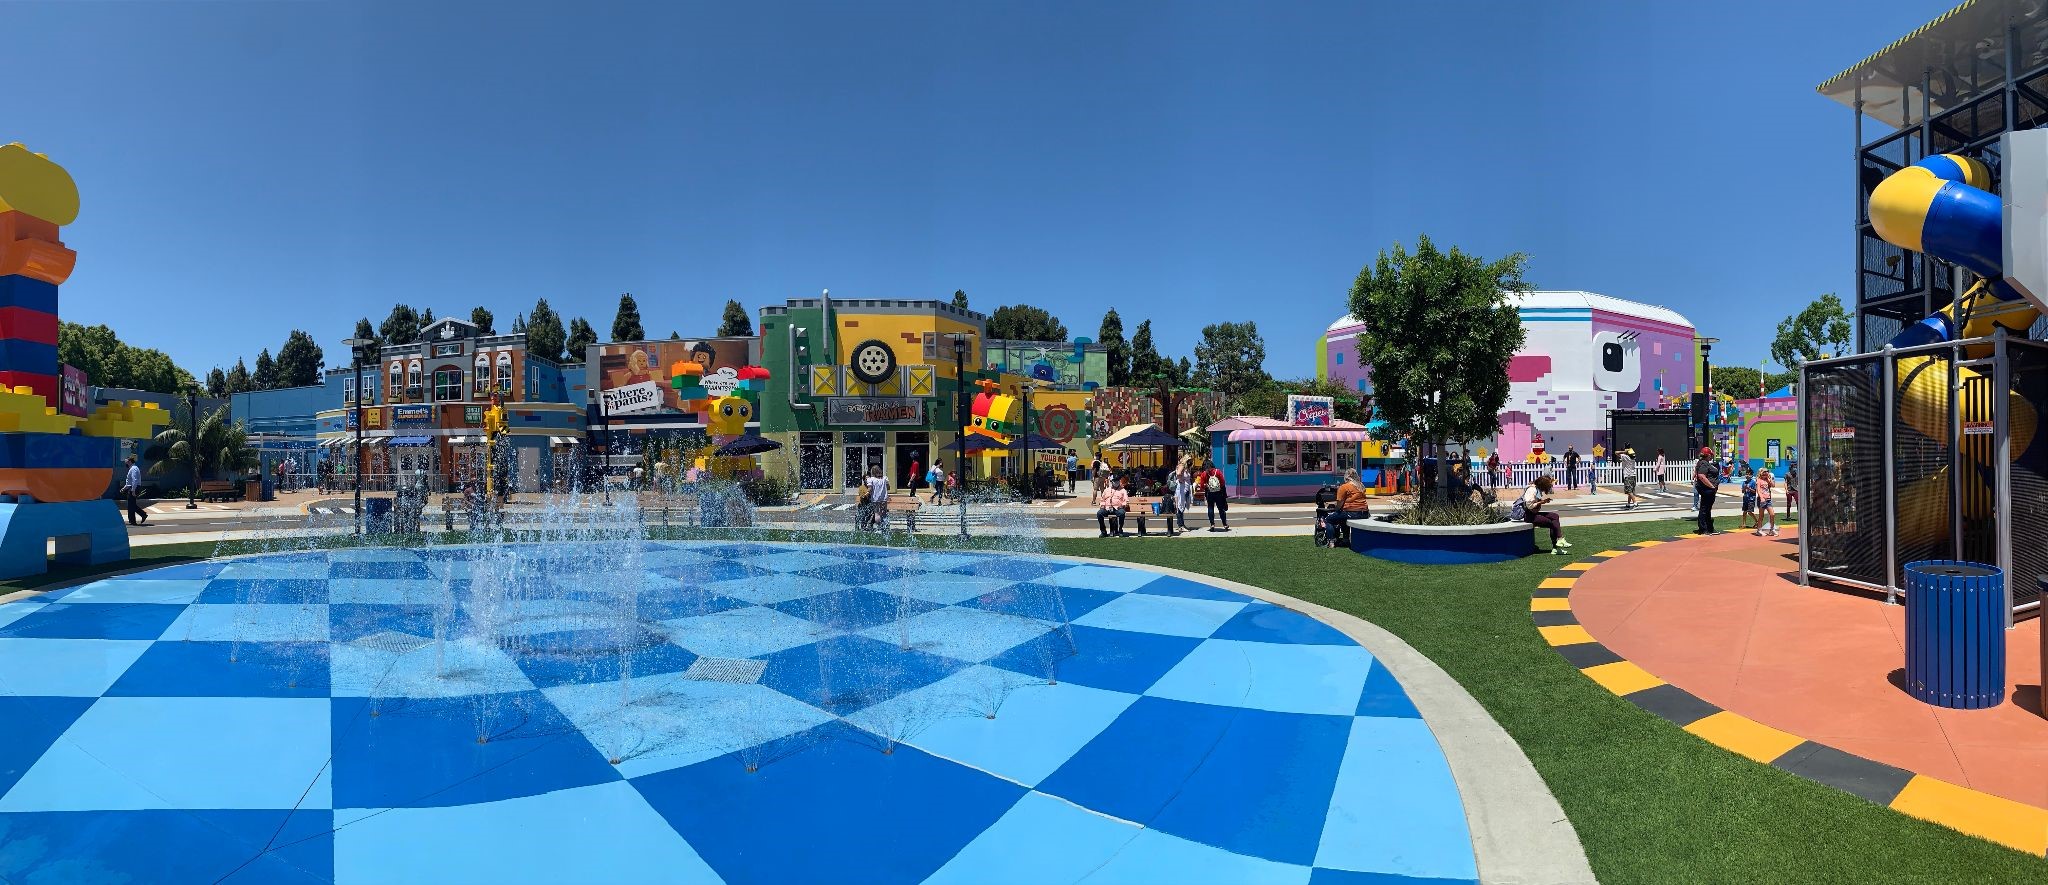 Legoland fountain